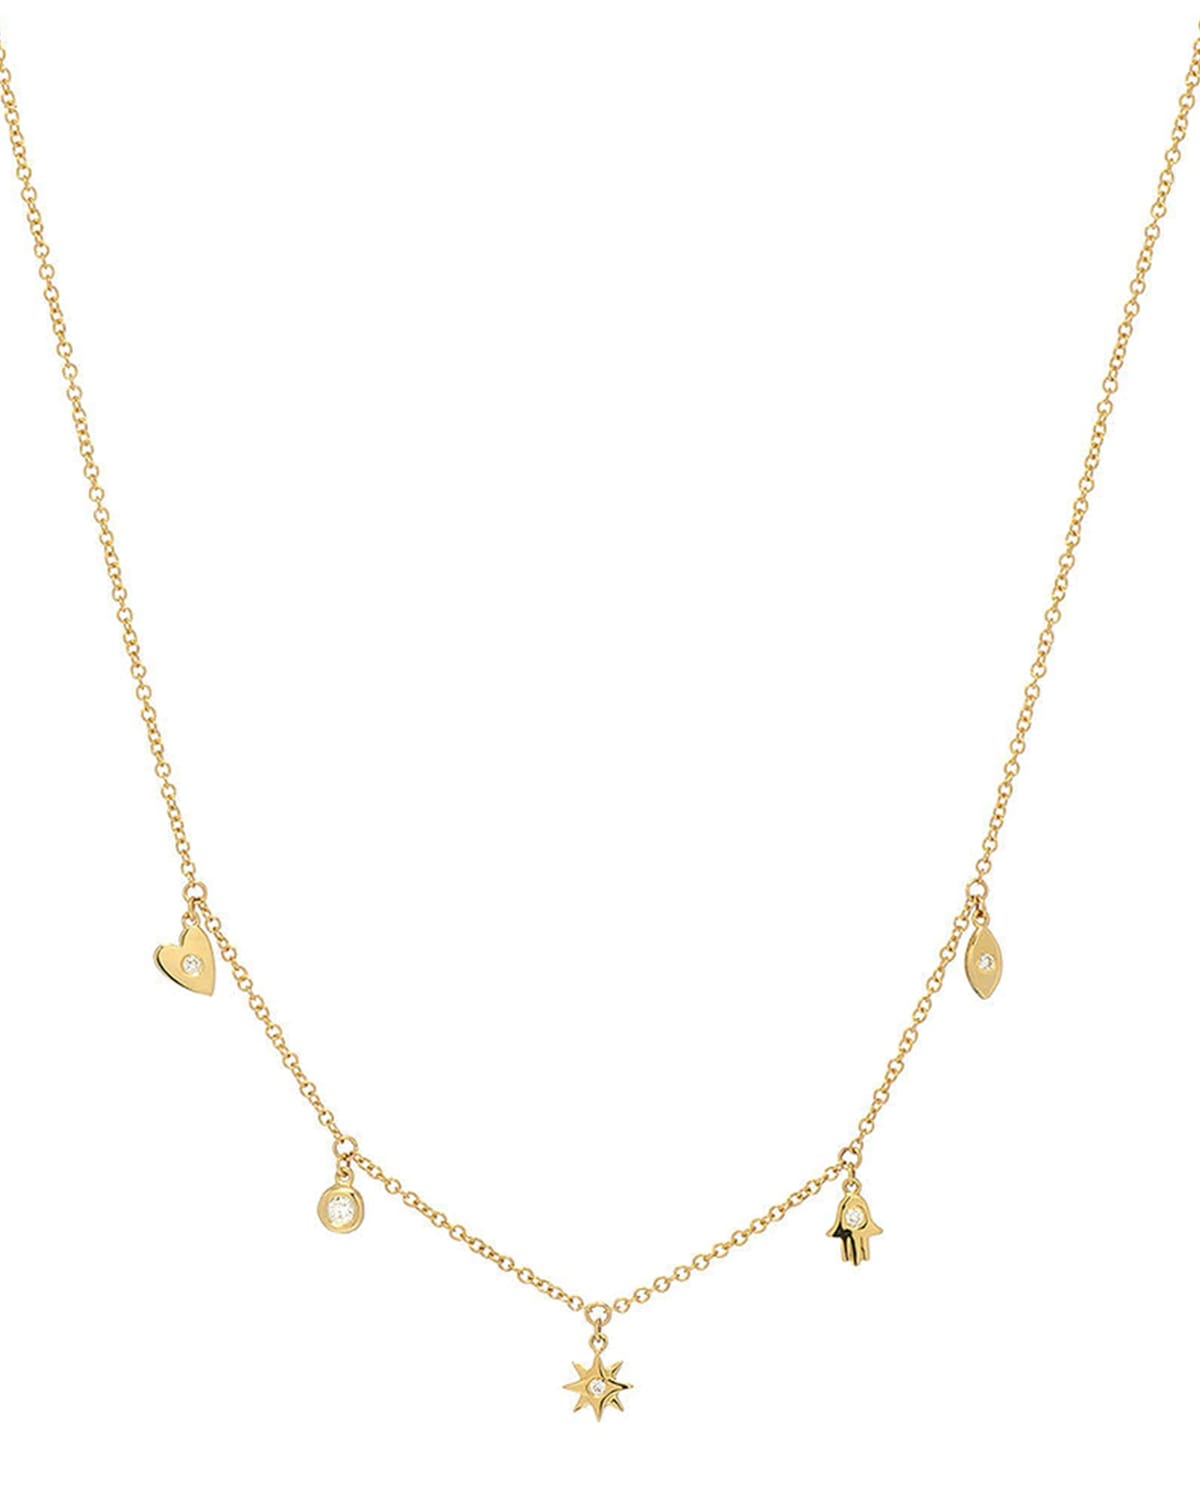 Zoe Lev Jewelry 14k Gold And Diamond Charm Necklace